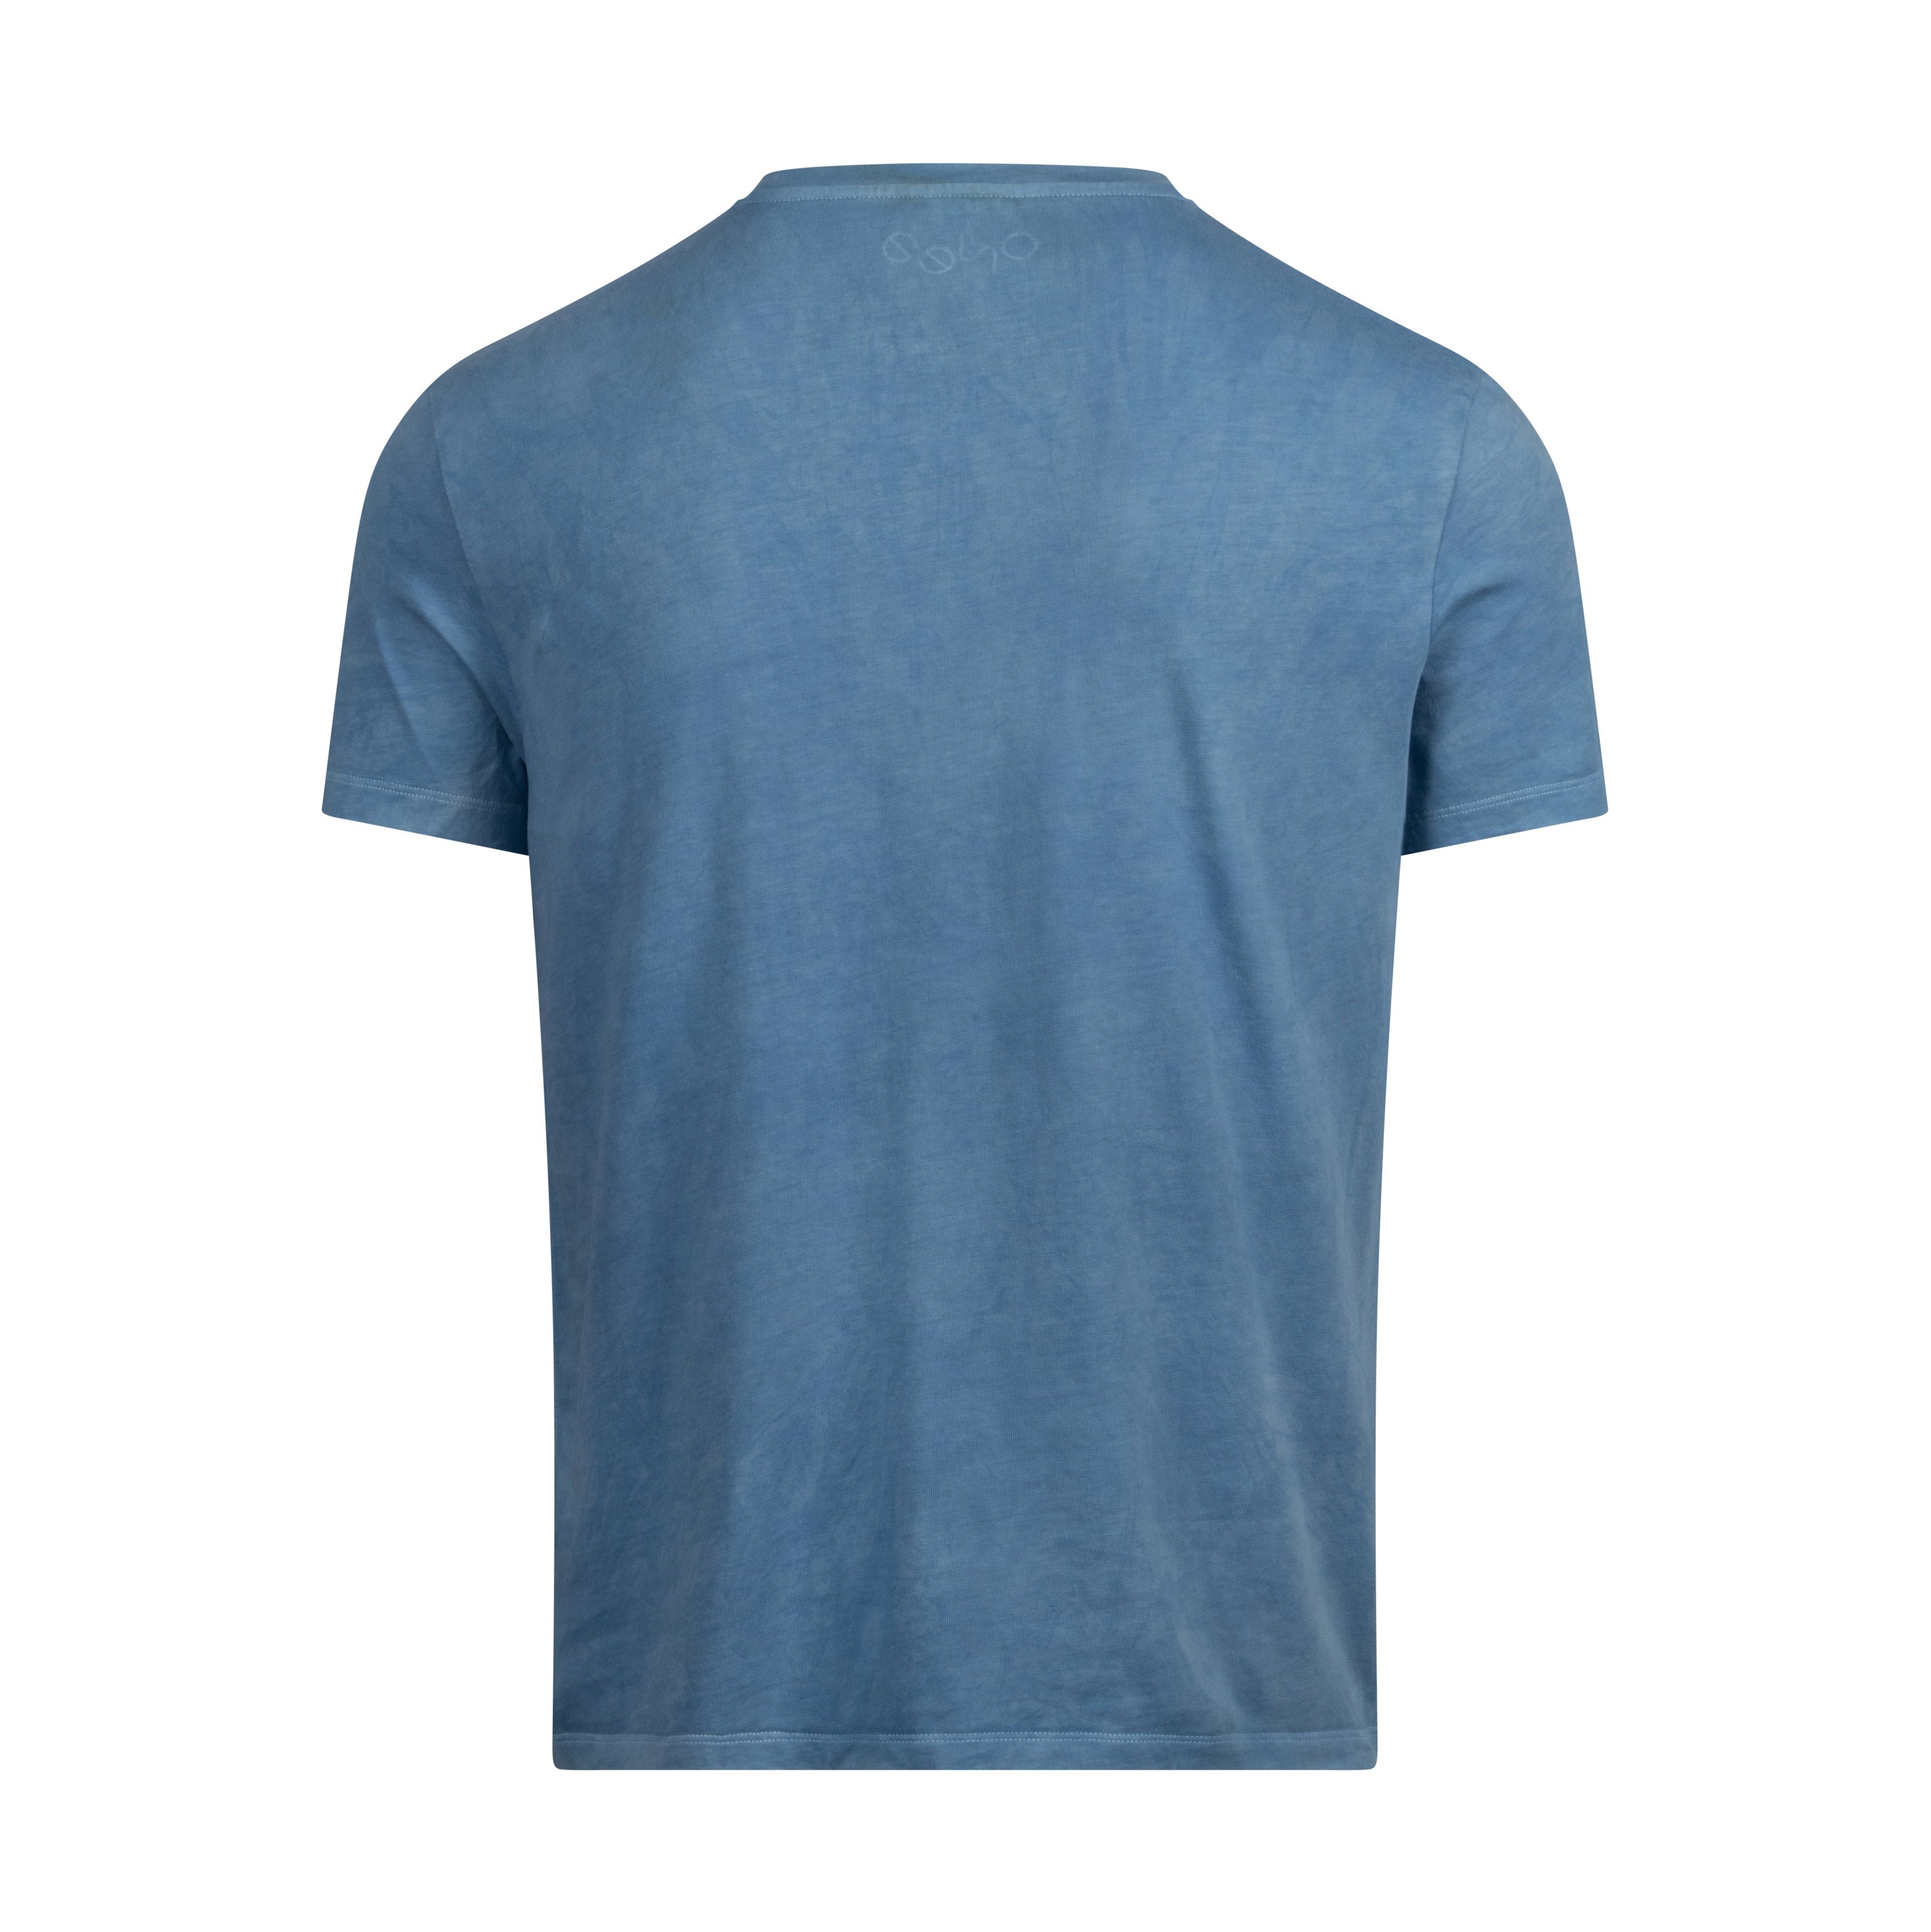 One Essentials unisex single-pocket t-shirt with pocket on left breast back